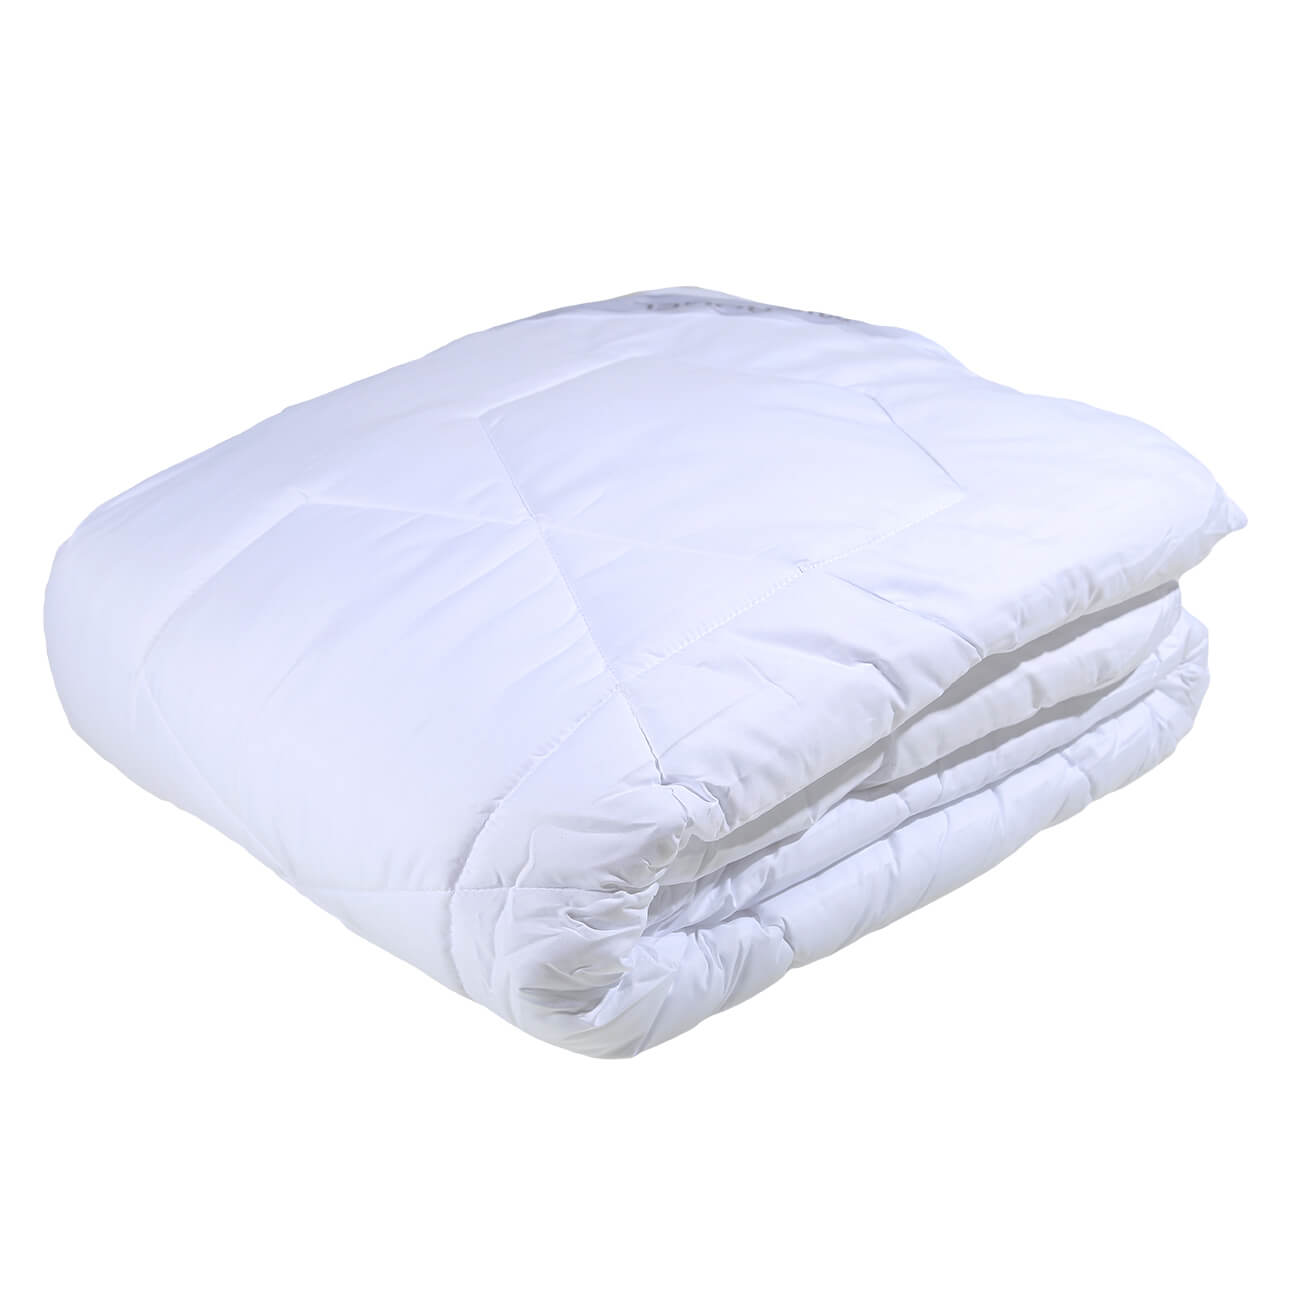 Одеяло, 200x220 cм, микрофибра/микрогель, Microgel одеяло огнеупорное теплоизоляционное профикамин 7300x610x13 мм